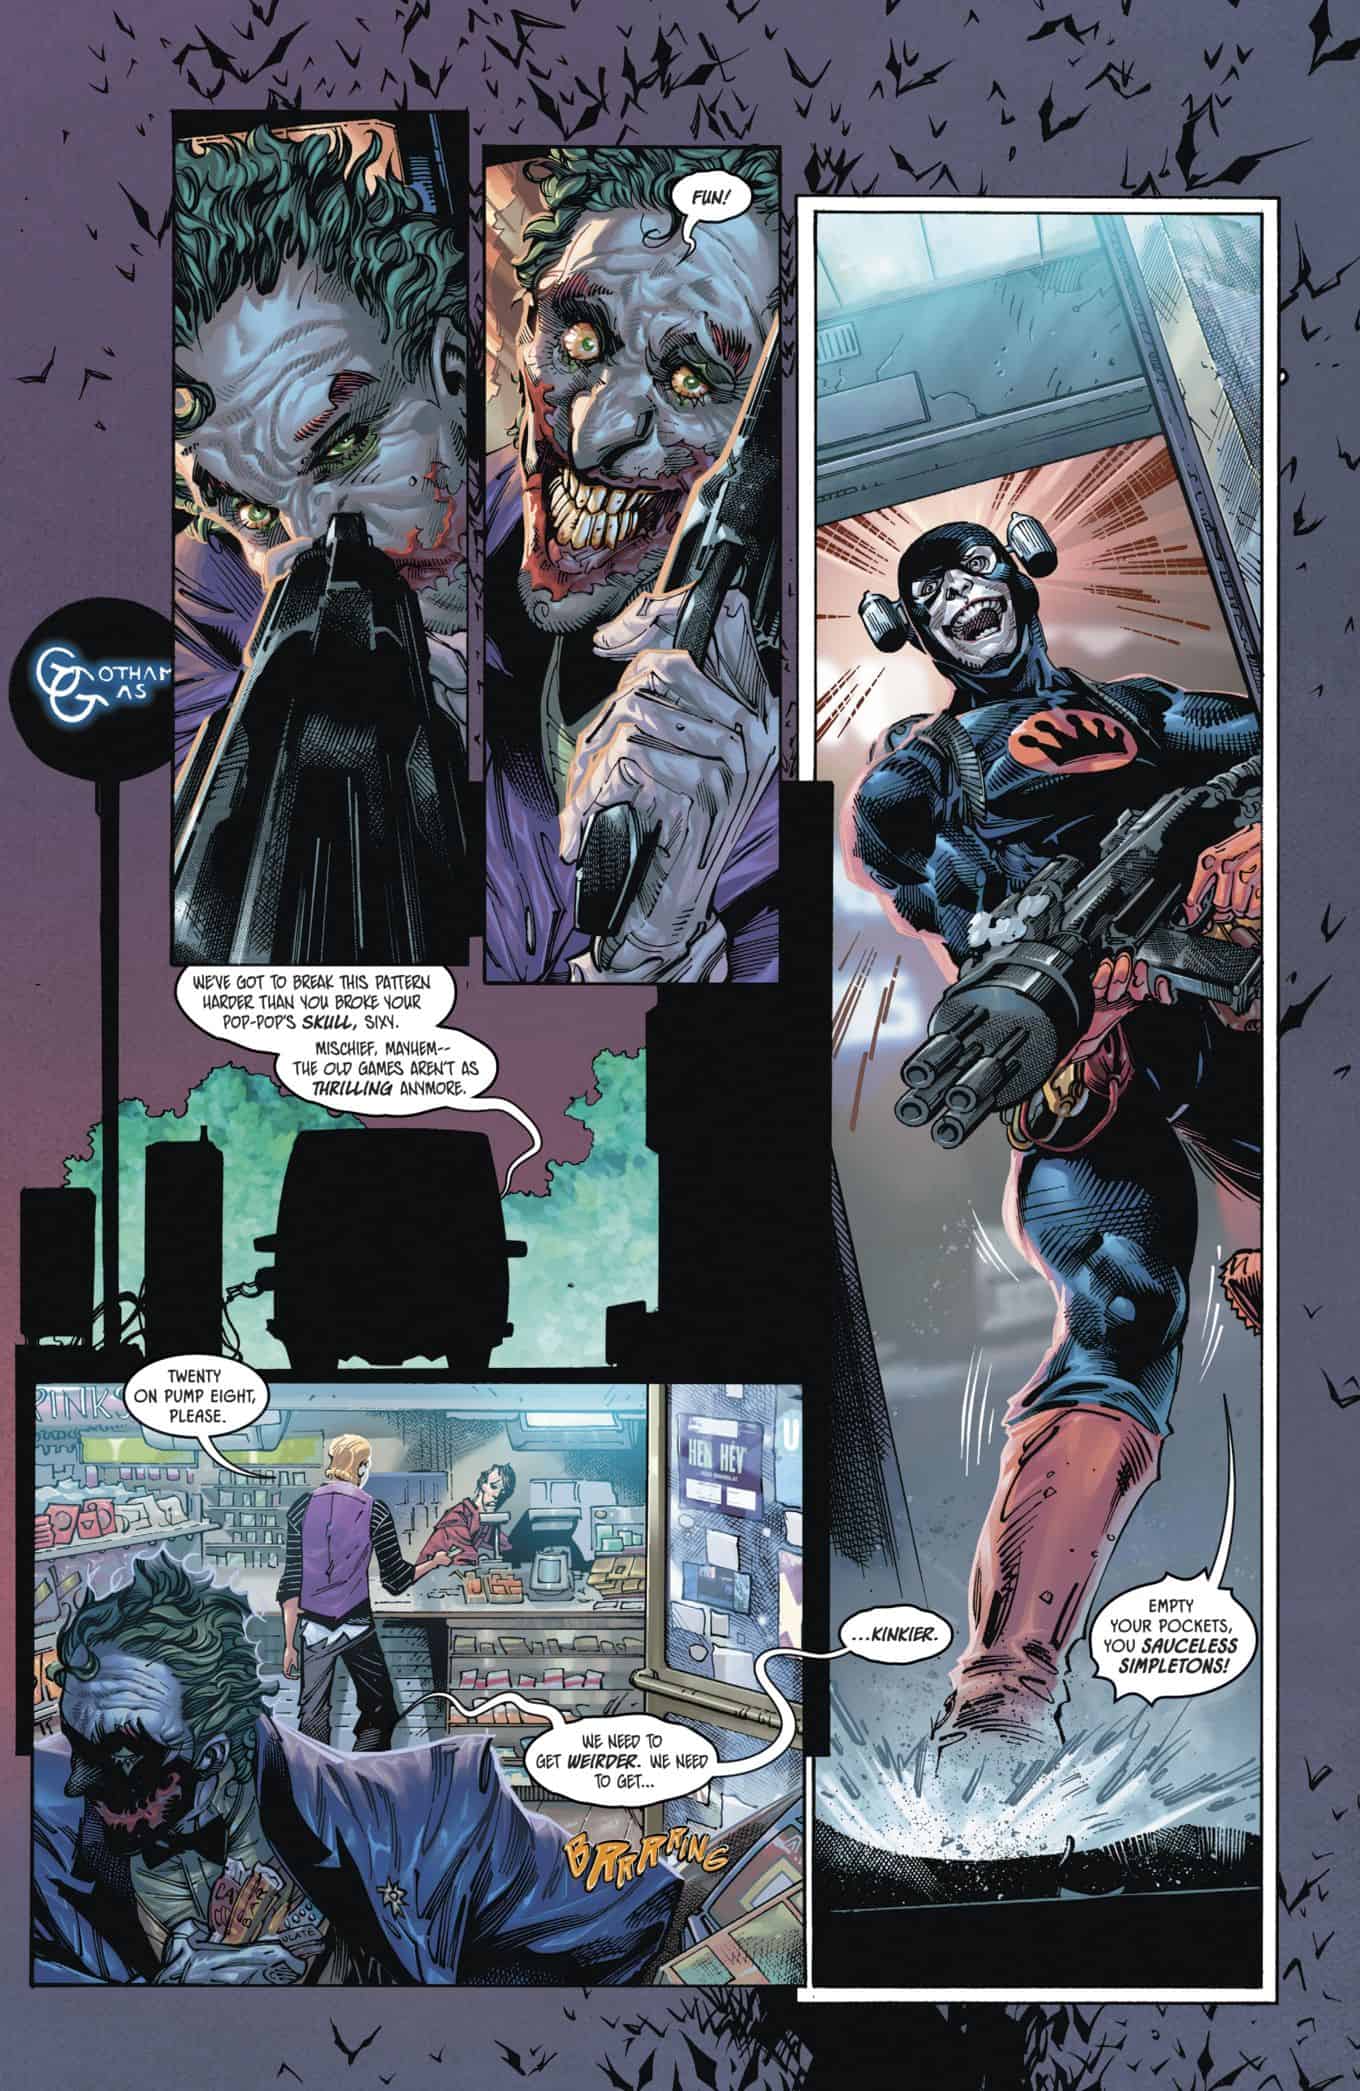 DC Comics Universe & DC's Year Of The Villain: The Joker #1